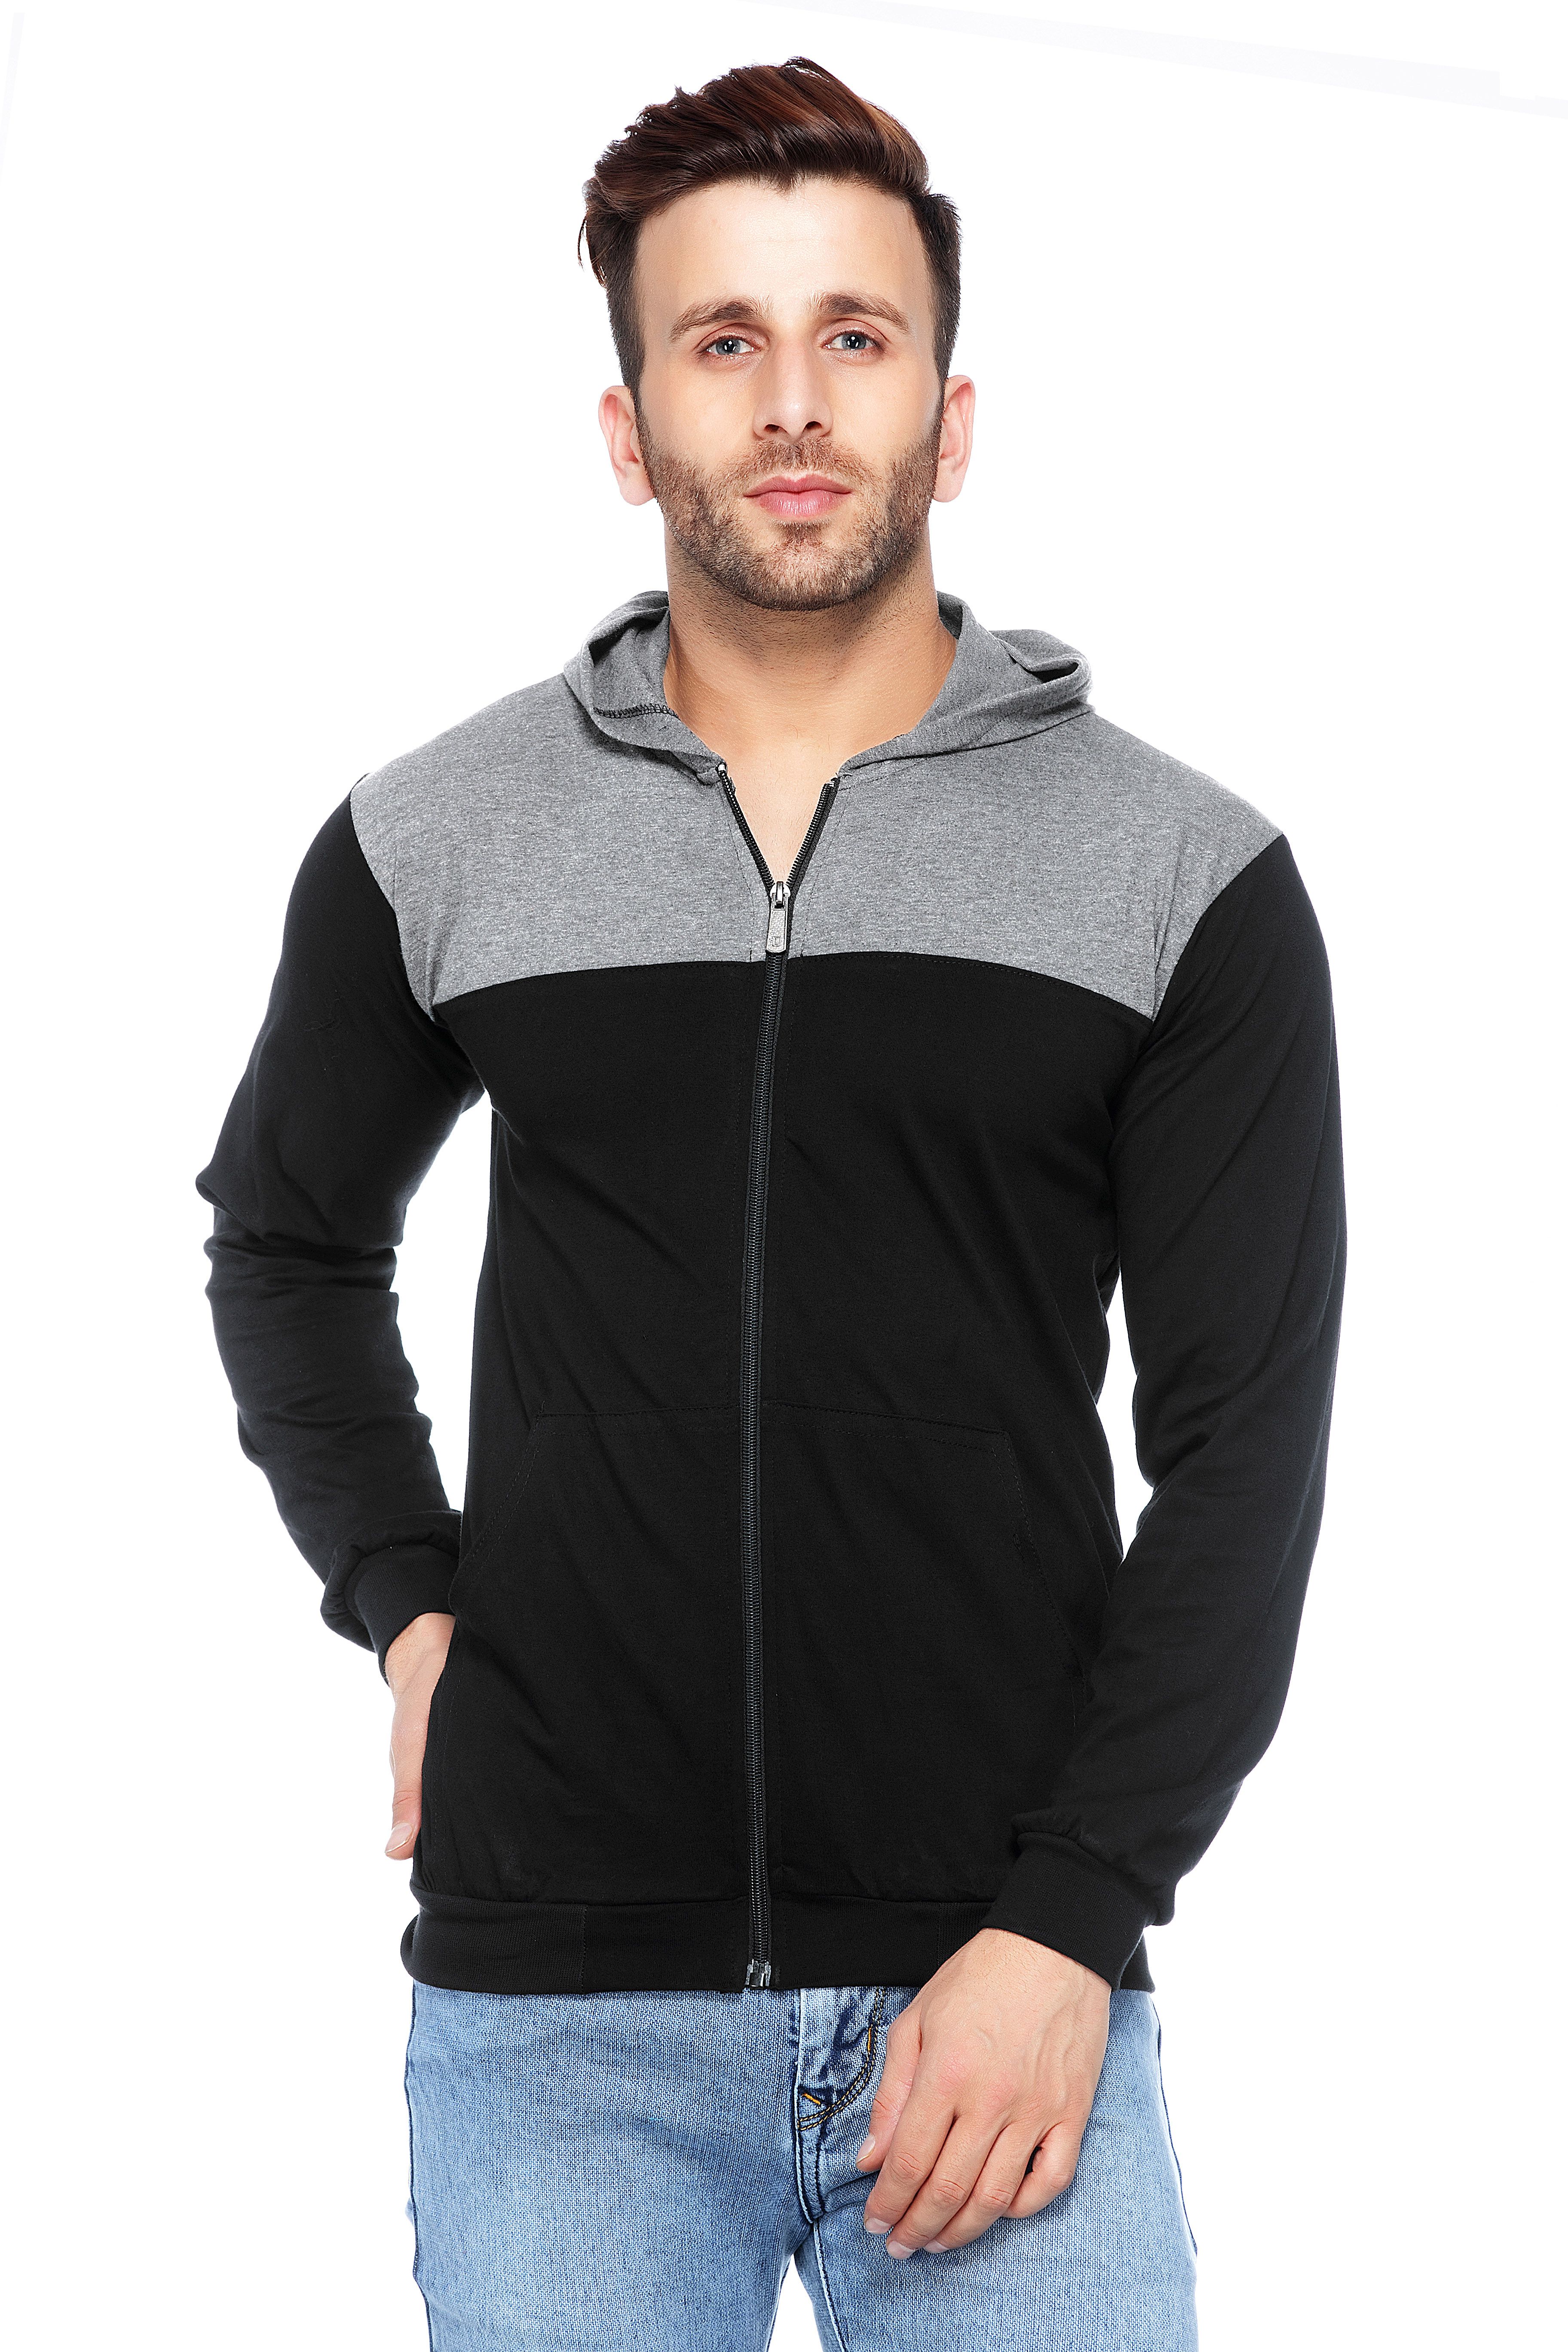 V3SQUARED Grey Hooded T-Shirt - Buy V3SQUARED Grey Hooded T-Shirt ...